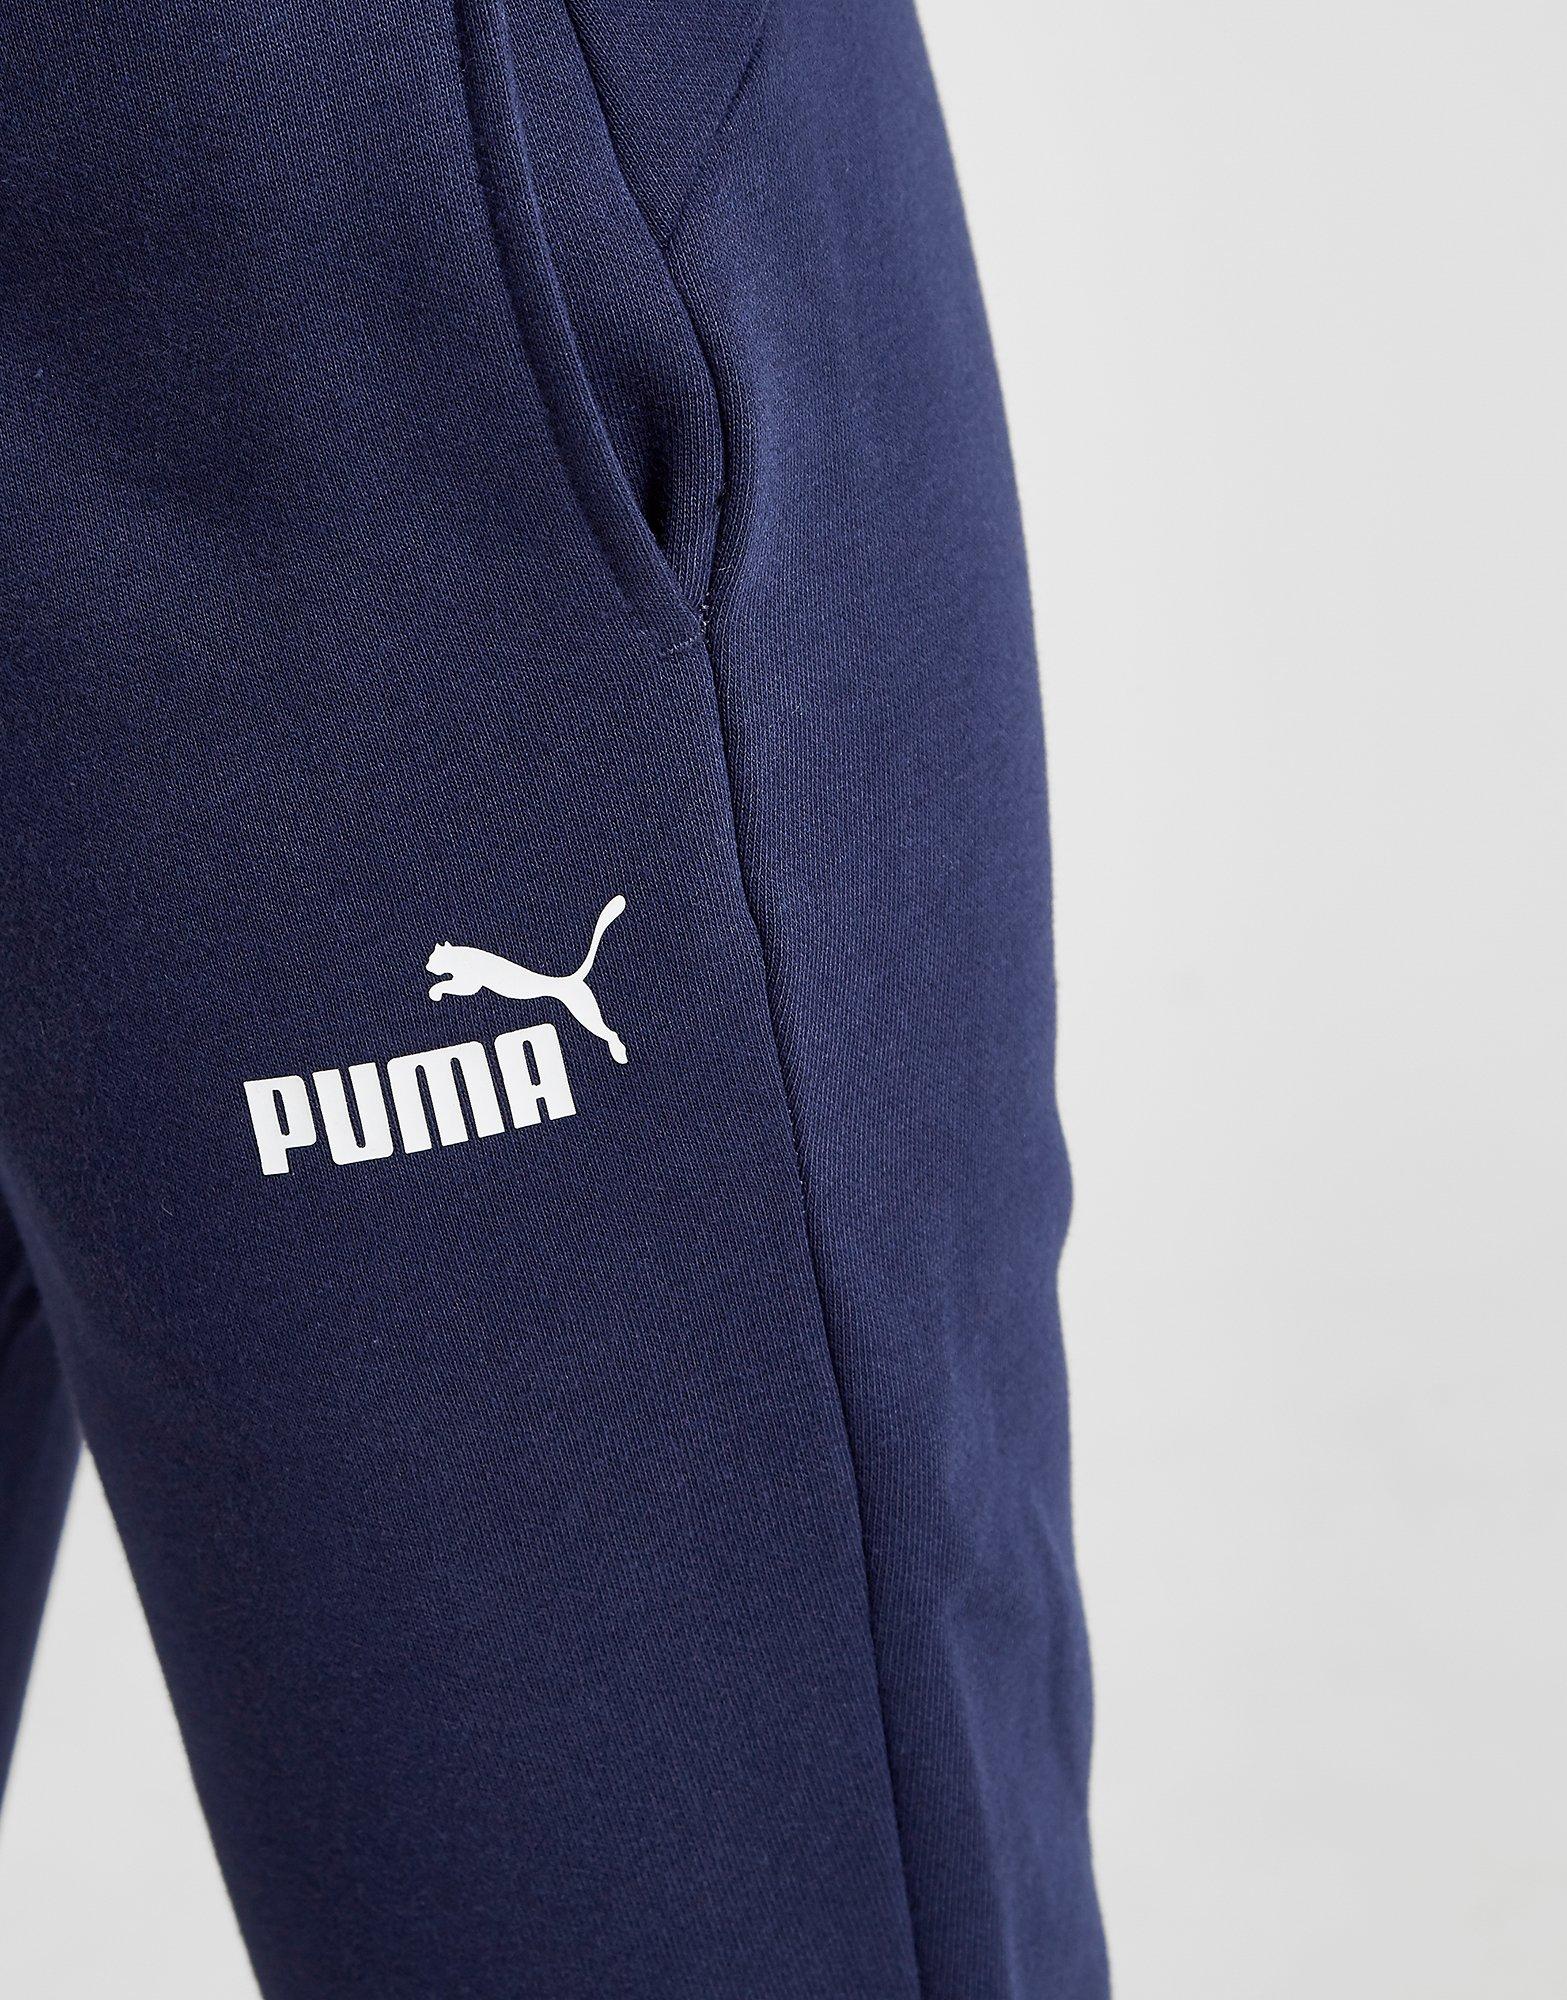 puma core logo pants navy